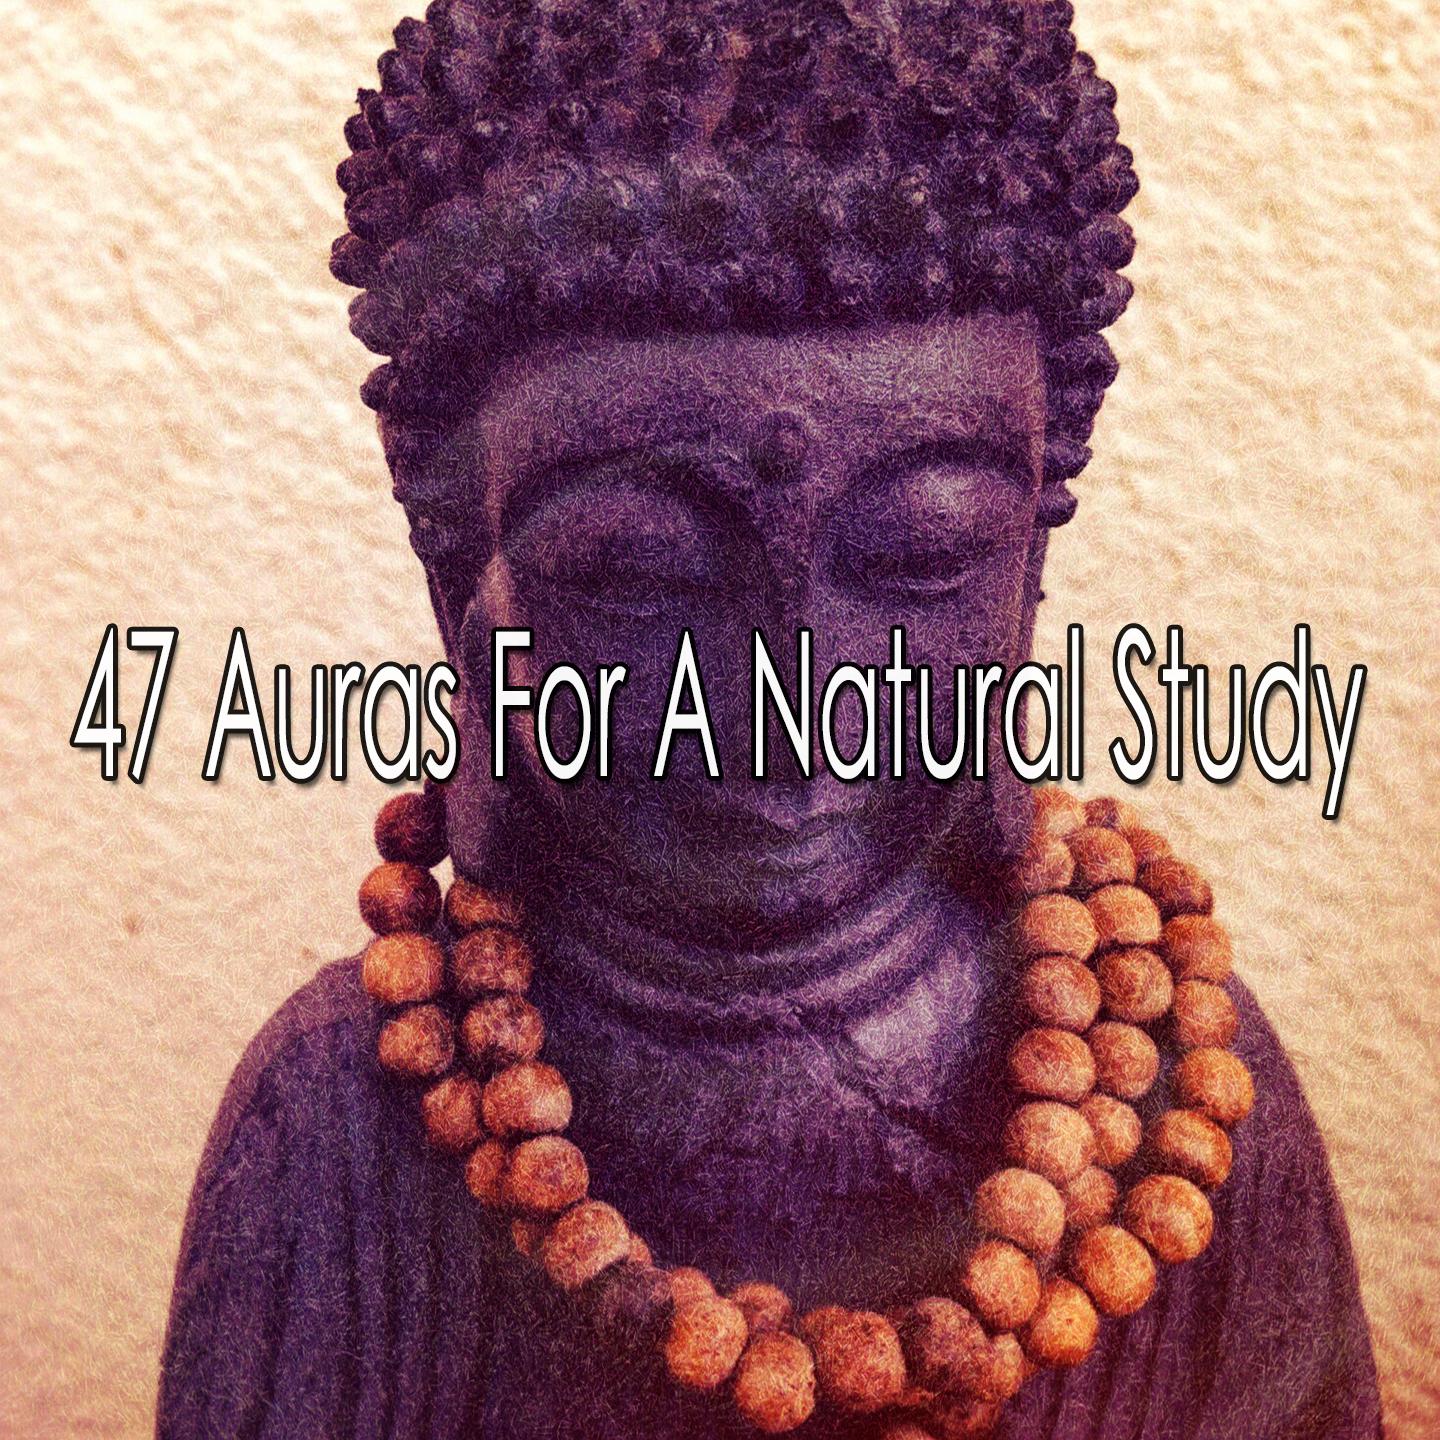 47 Auras for a Natural Study